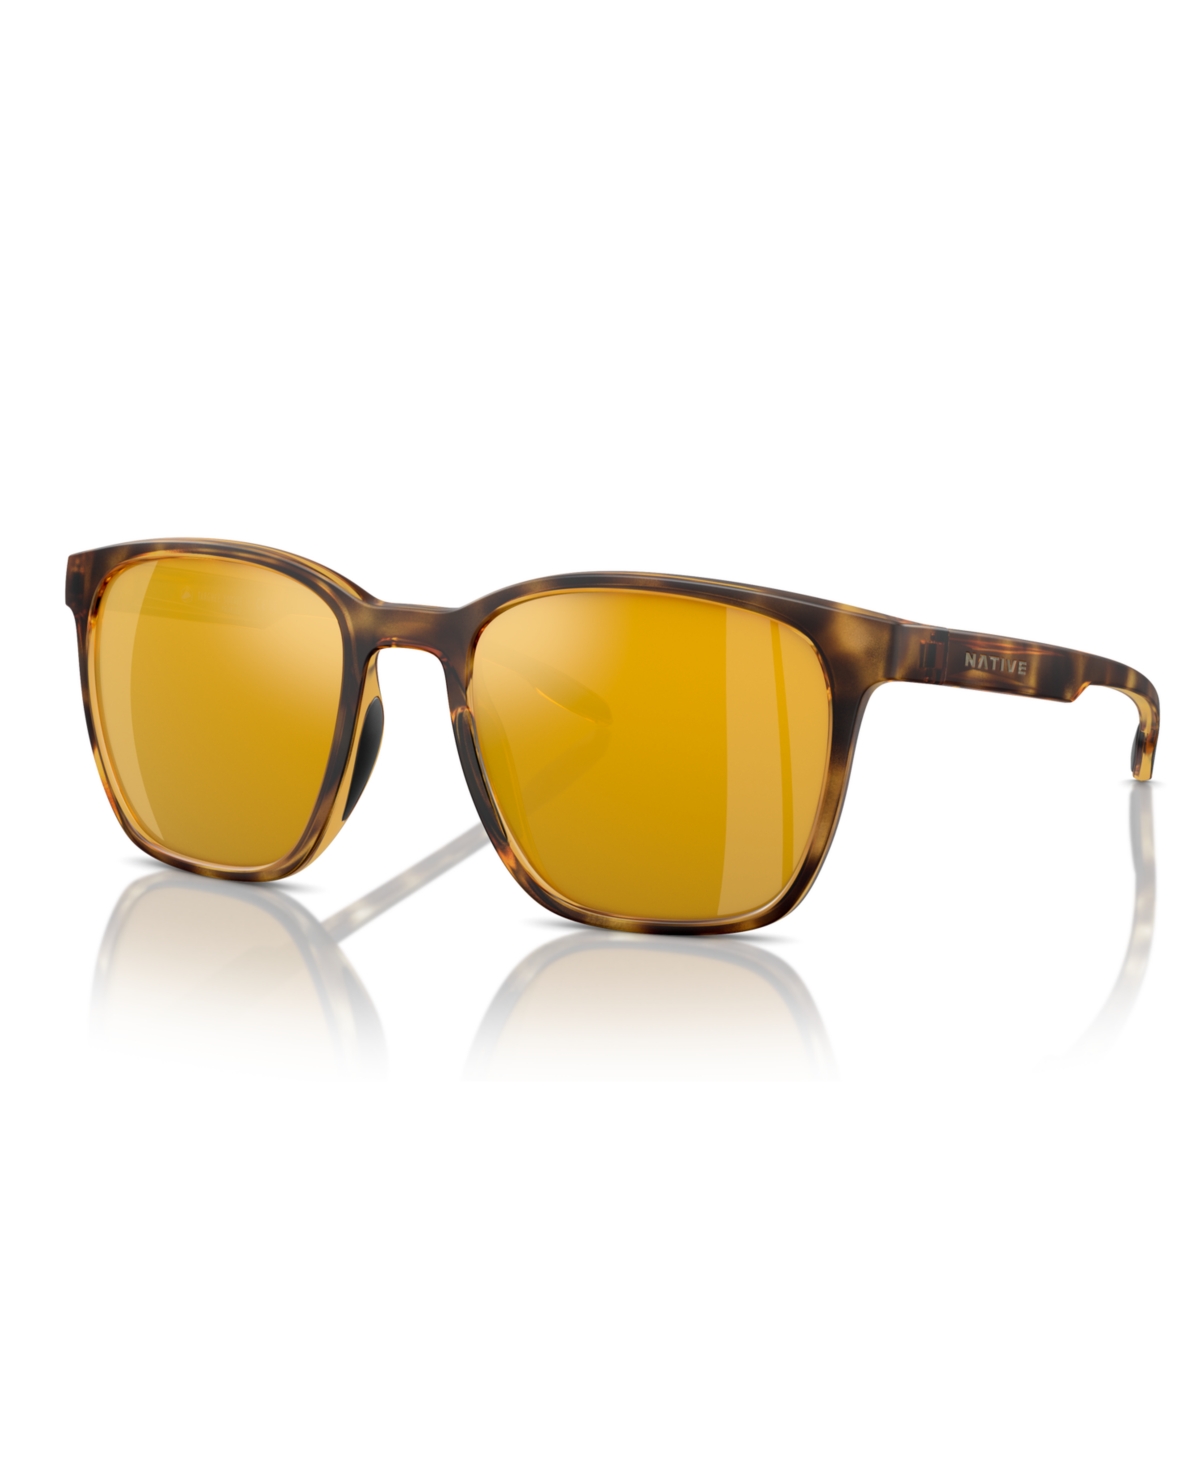 Native Eyewear Unisex Polarized Sunglasses, Targhee Square Xd9046 In Brown